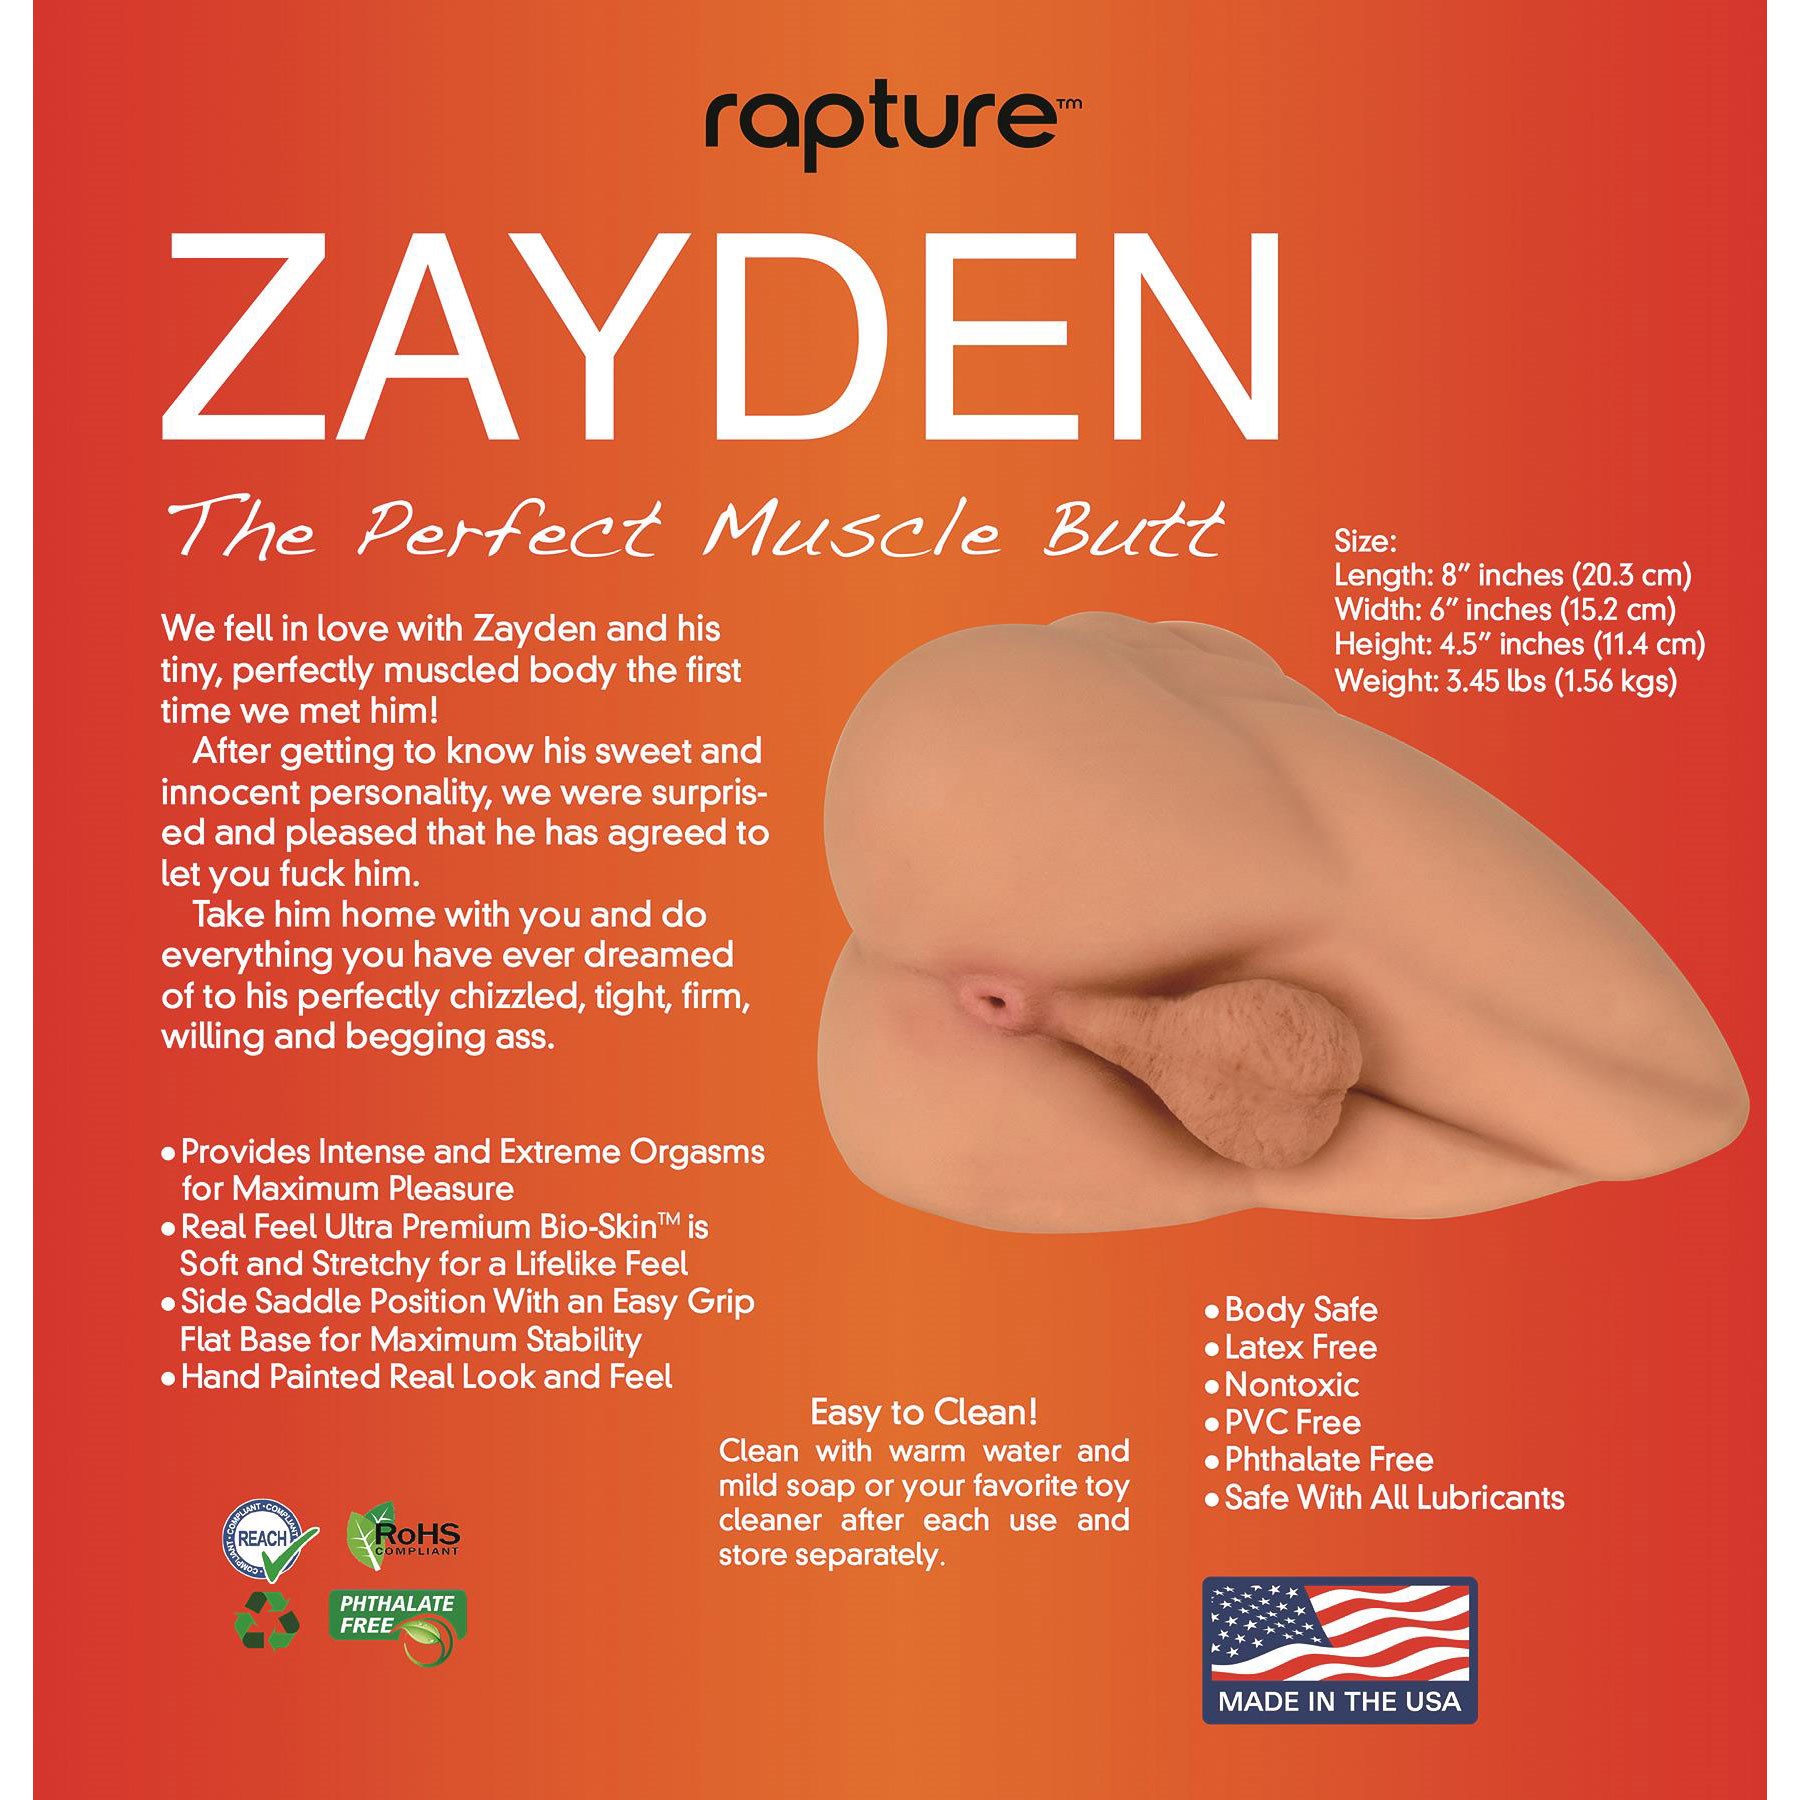 Zayden The Perfect Muscle Butt packaging